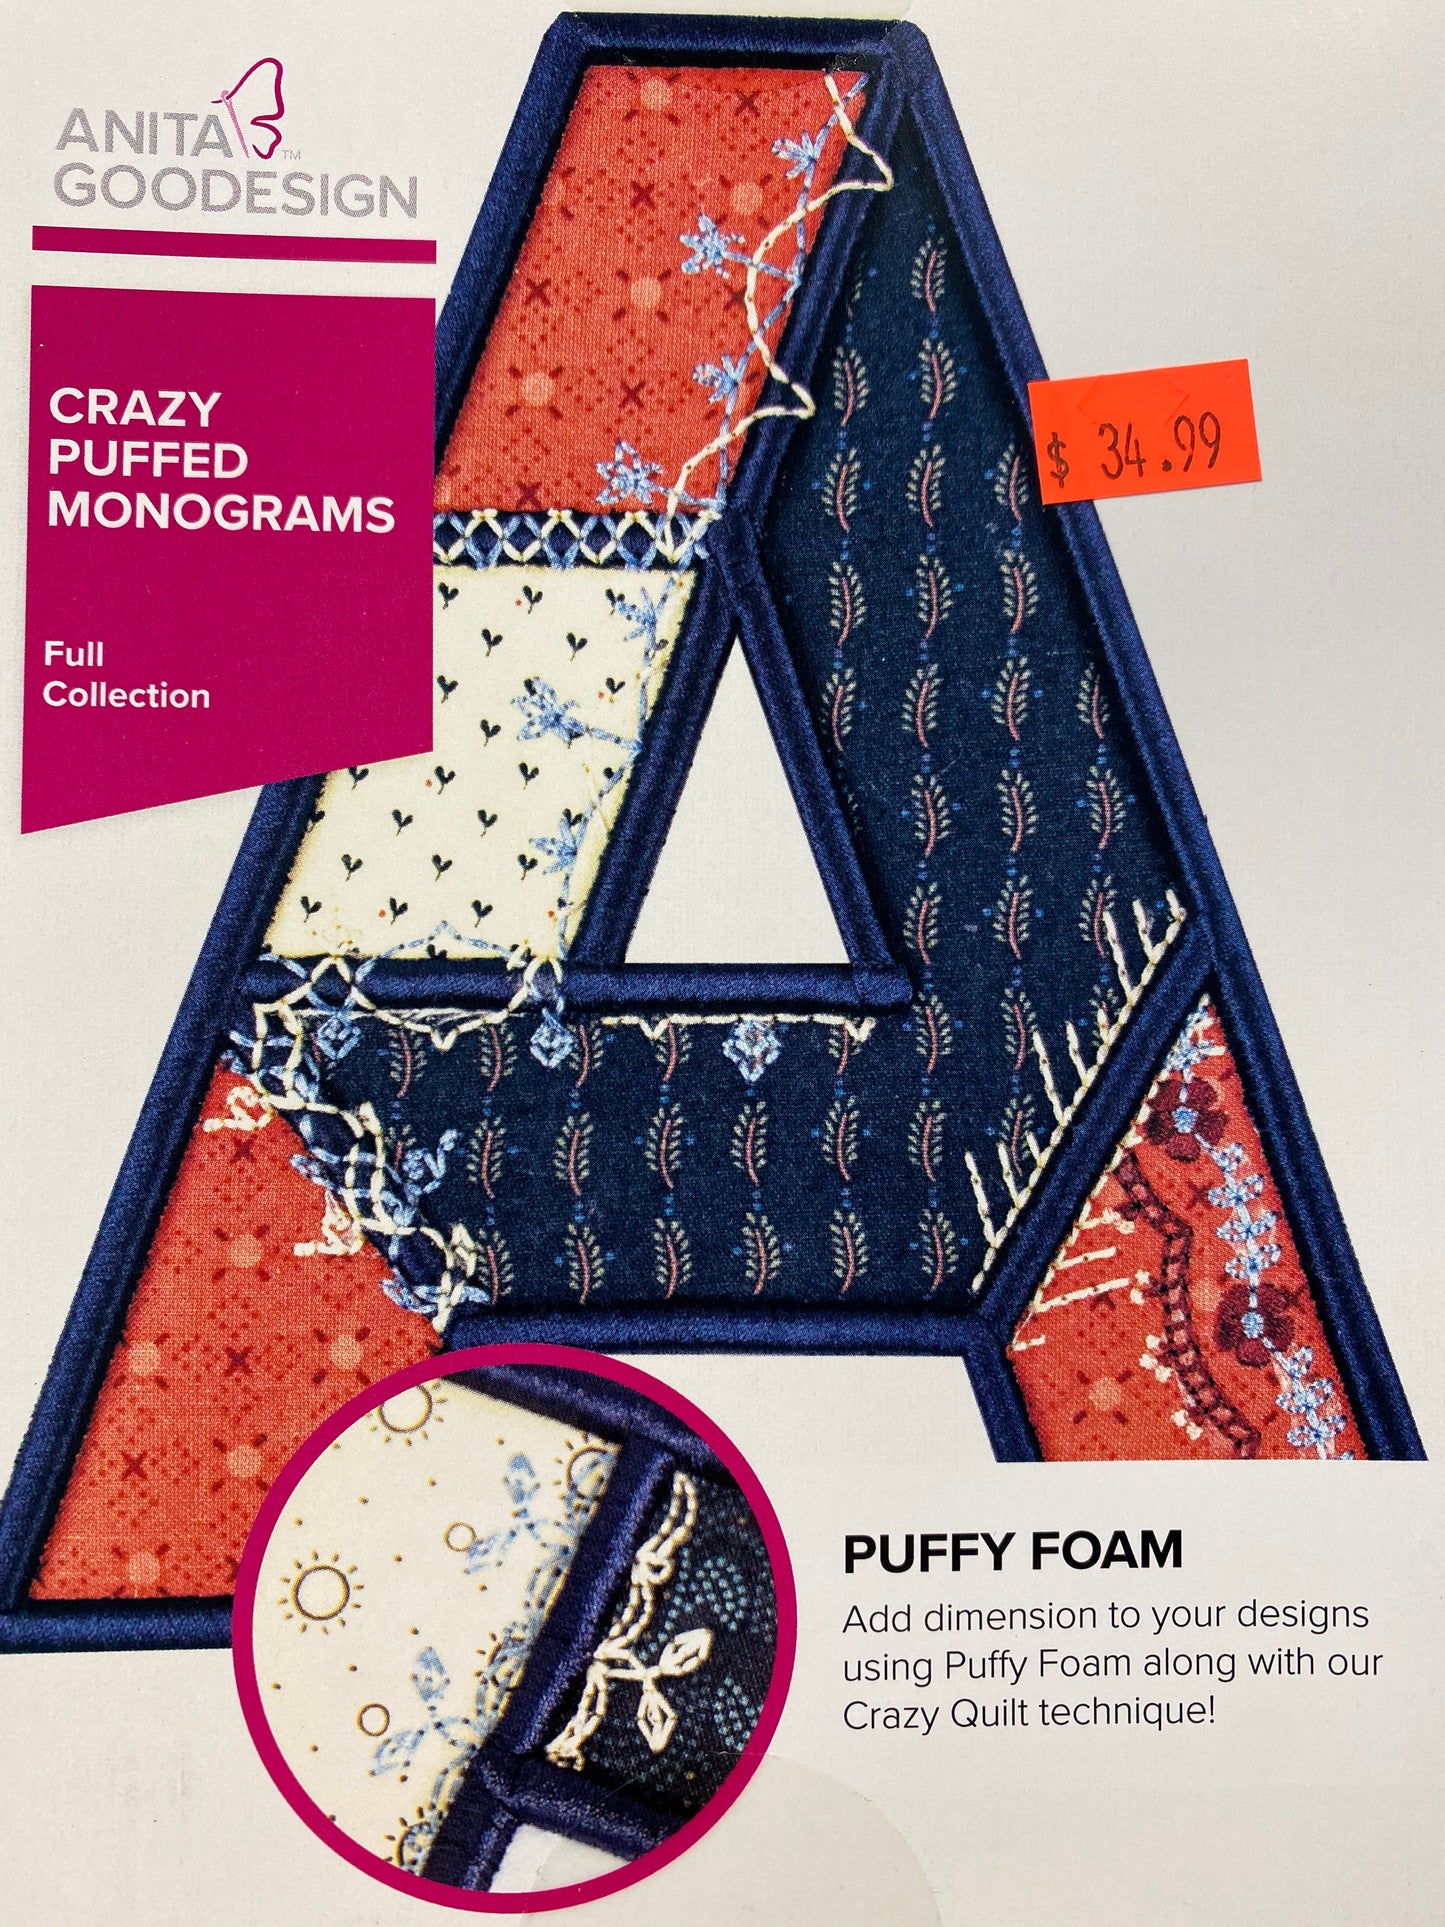 Crazy Puffed Monograms by Anita Goodesign